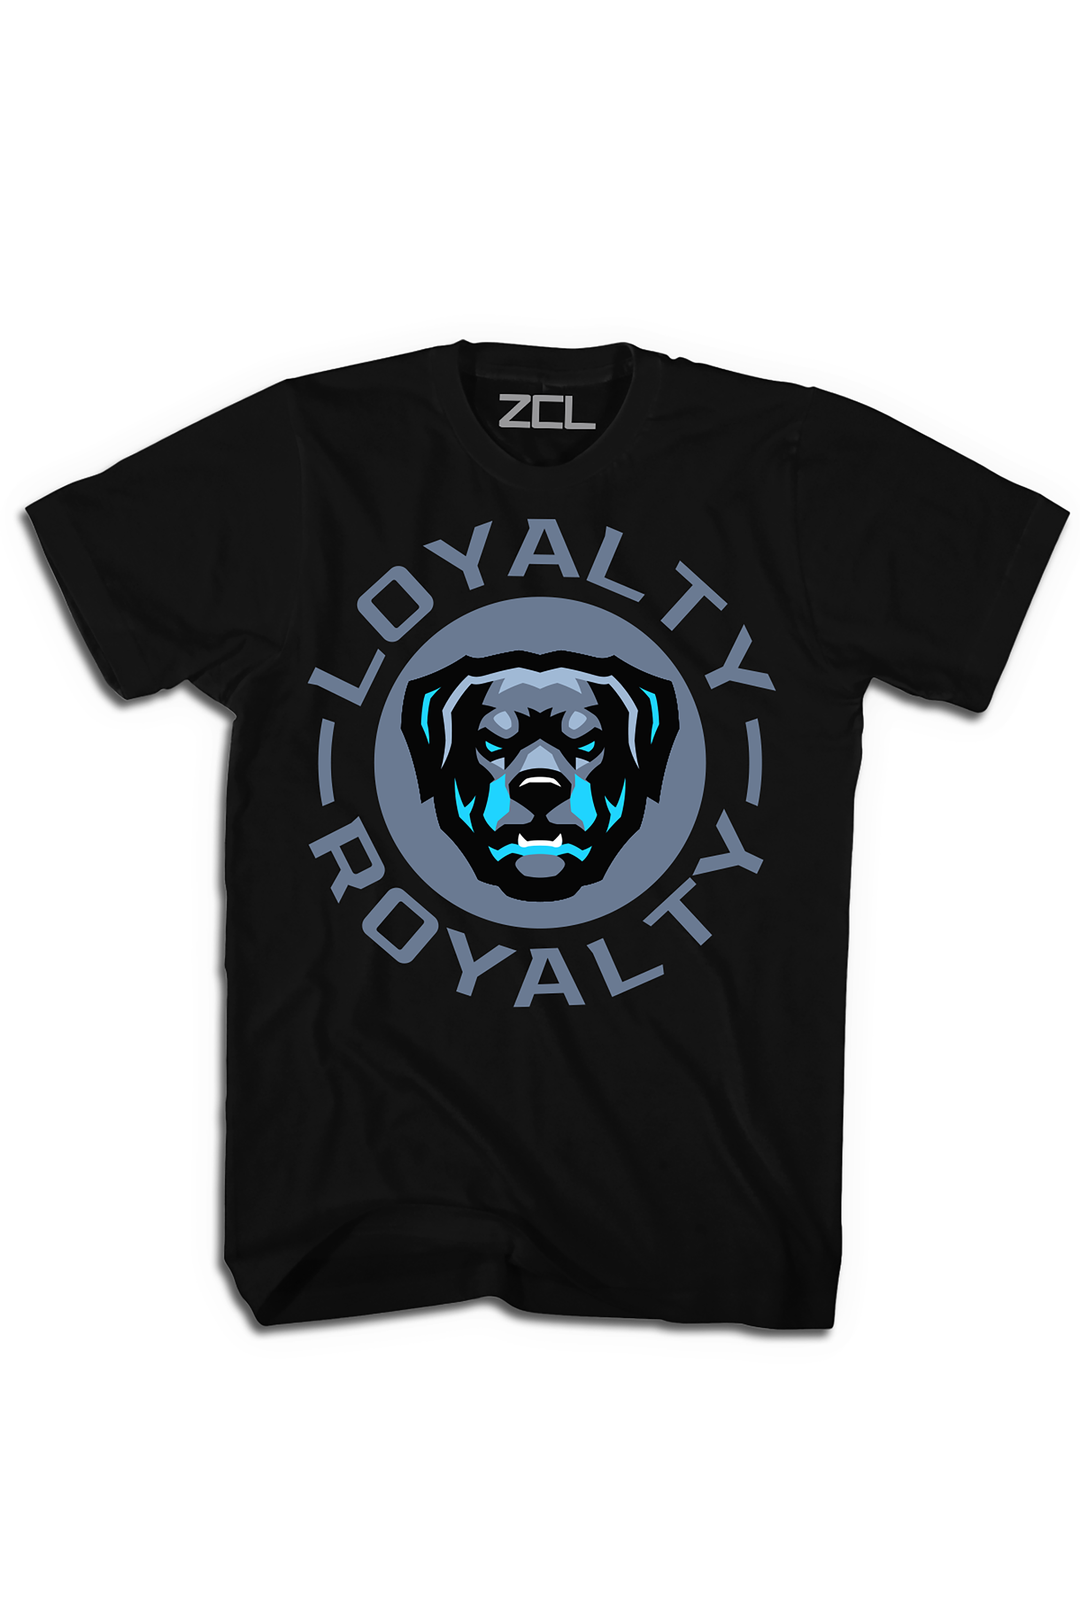 ZCL Loyalty-Royalty Tee Black - Zamage